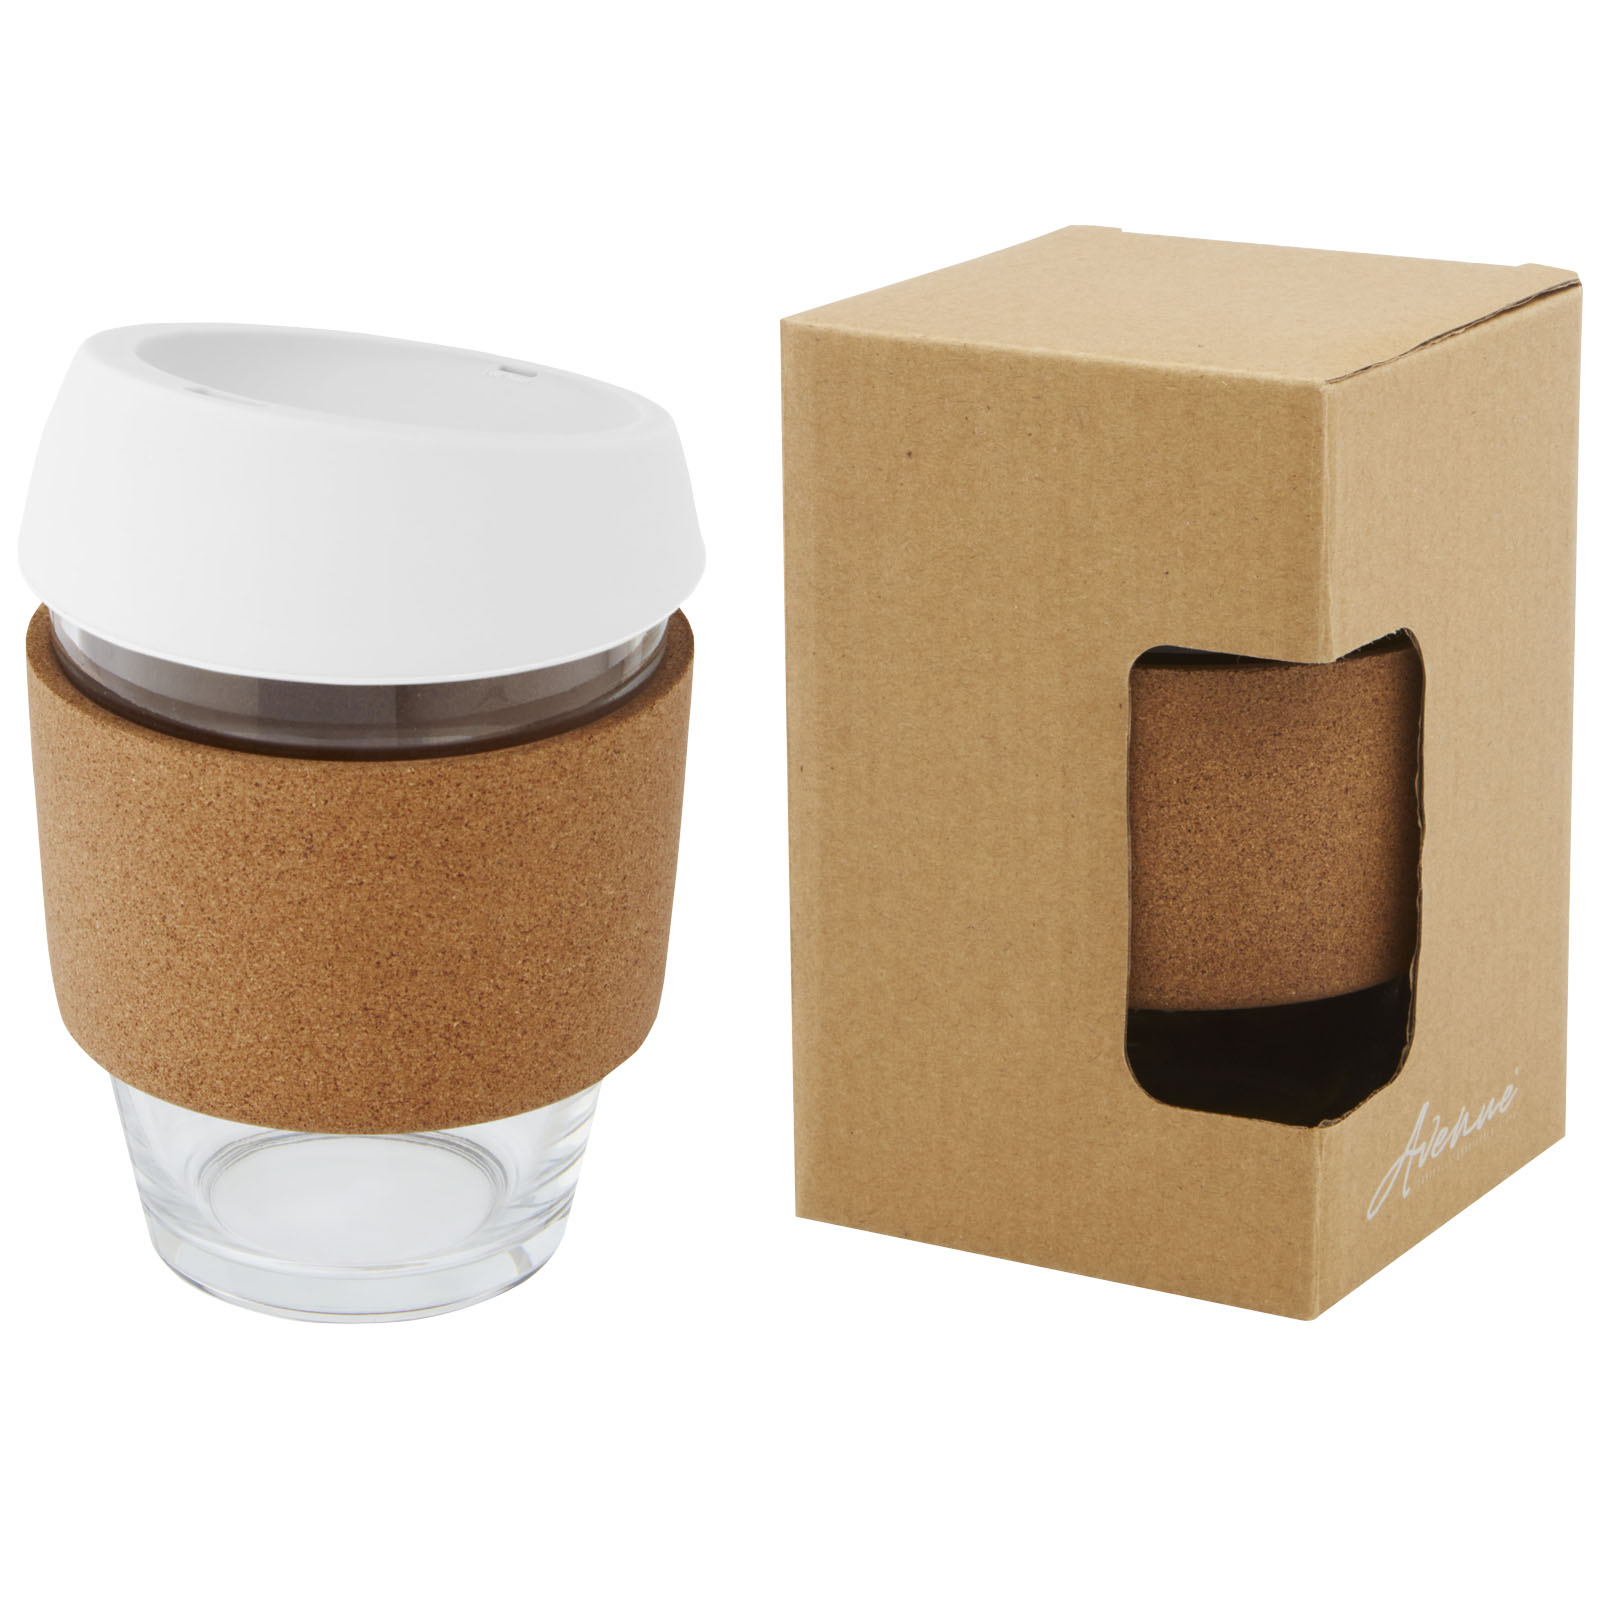 Travel mugs - Lidan 360 ml borosilicate glass tumbler with cork grip and silicone lid